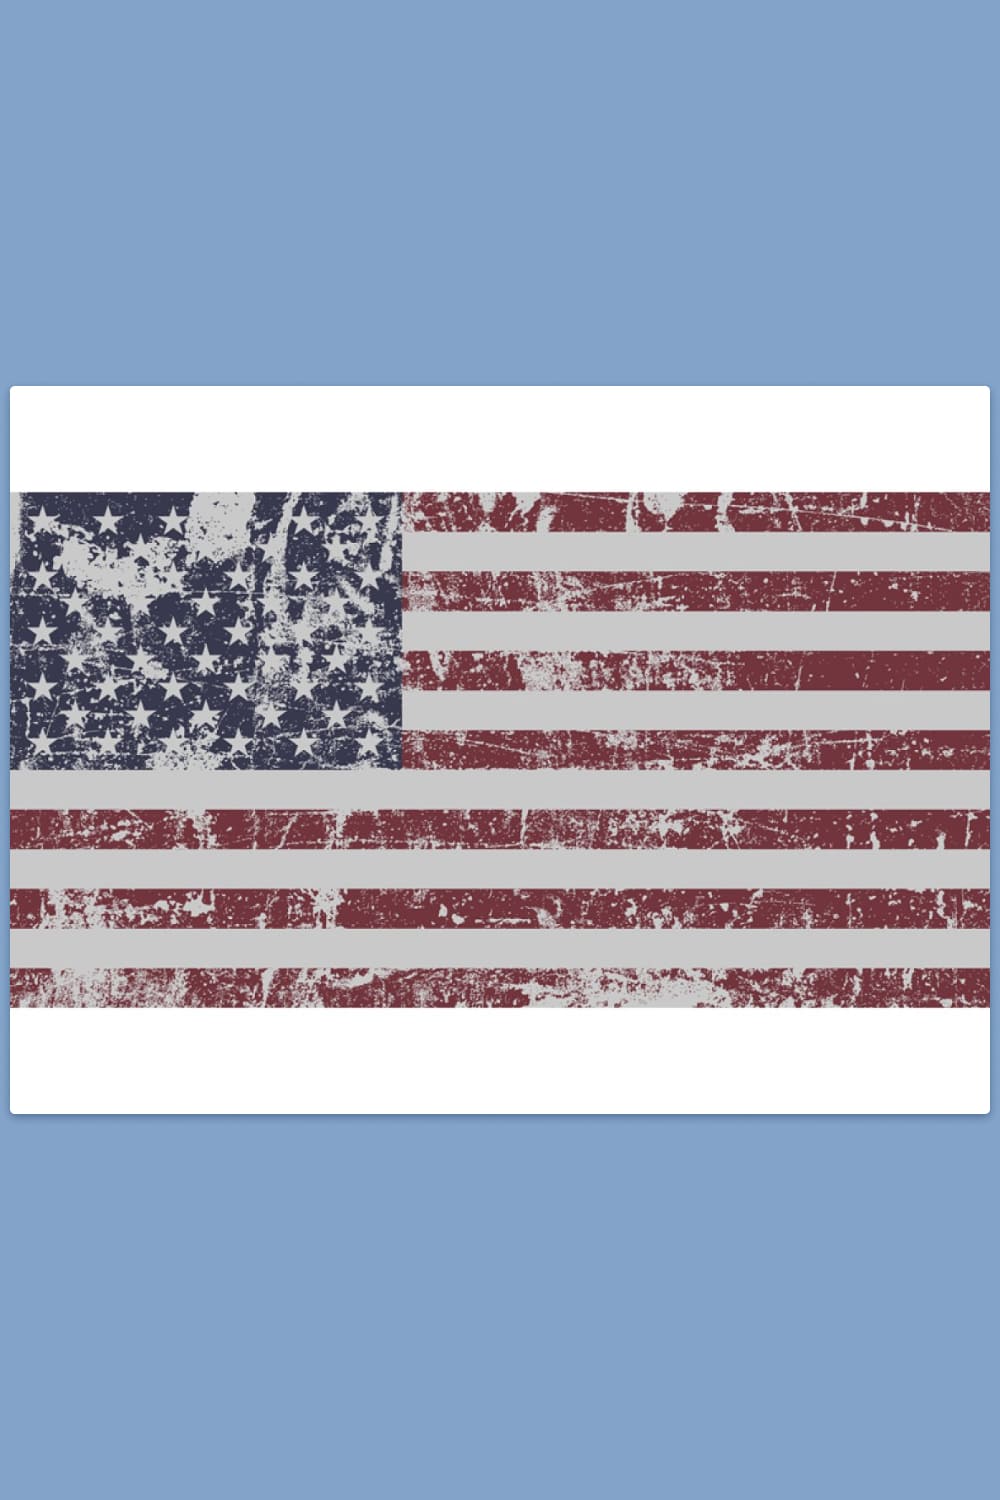 American flag in vintage style.